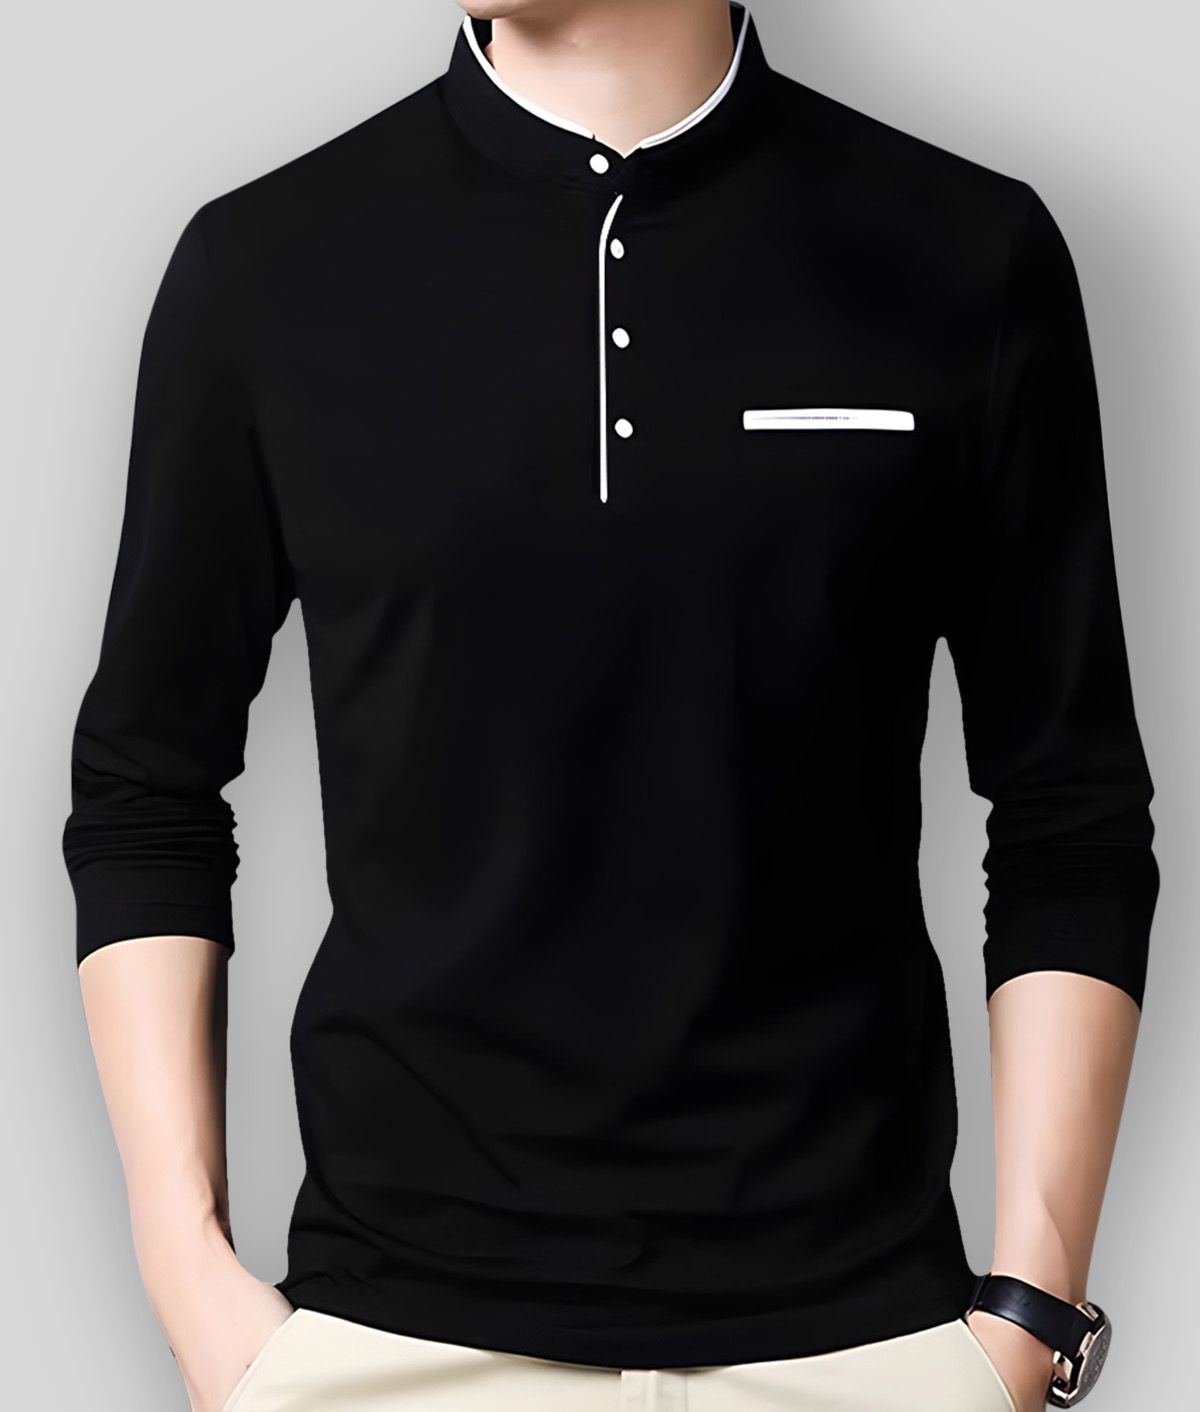     			GESPO - Black Cotton Blend Regular Fit  Men's T-Shirt ( Pack of 1 )